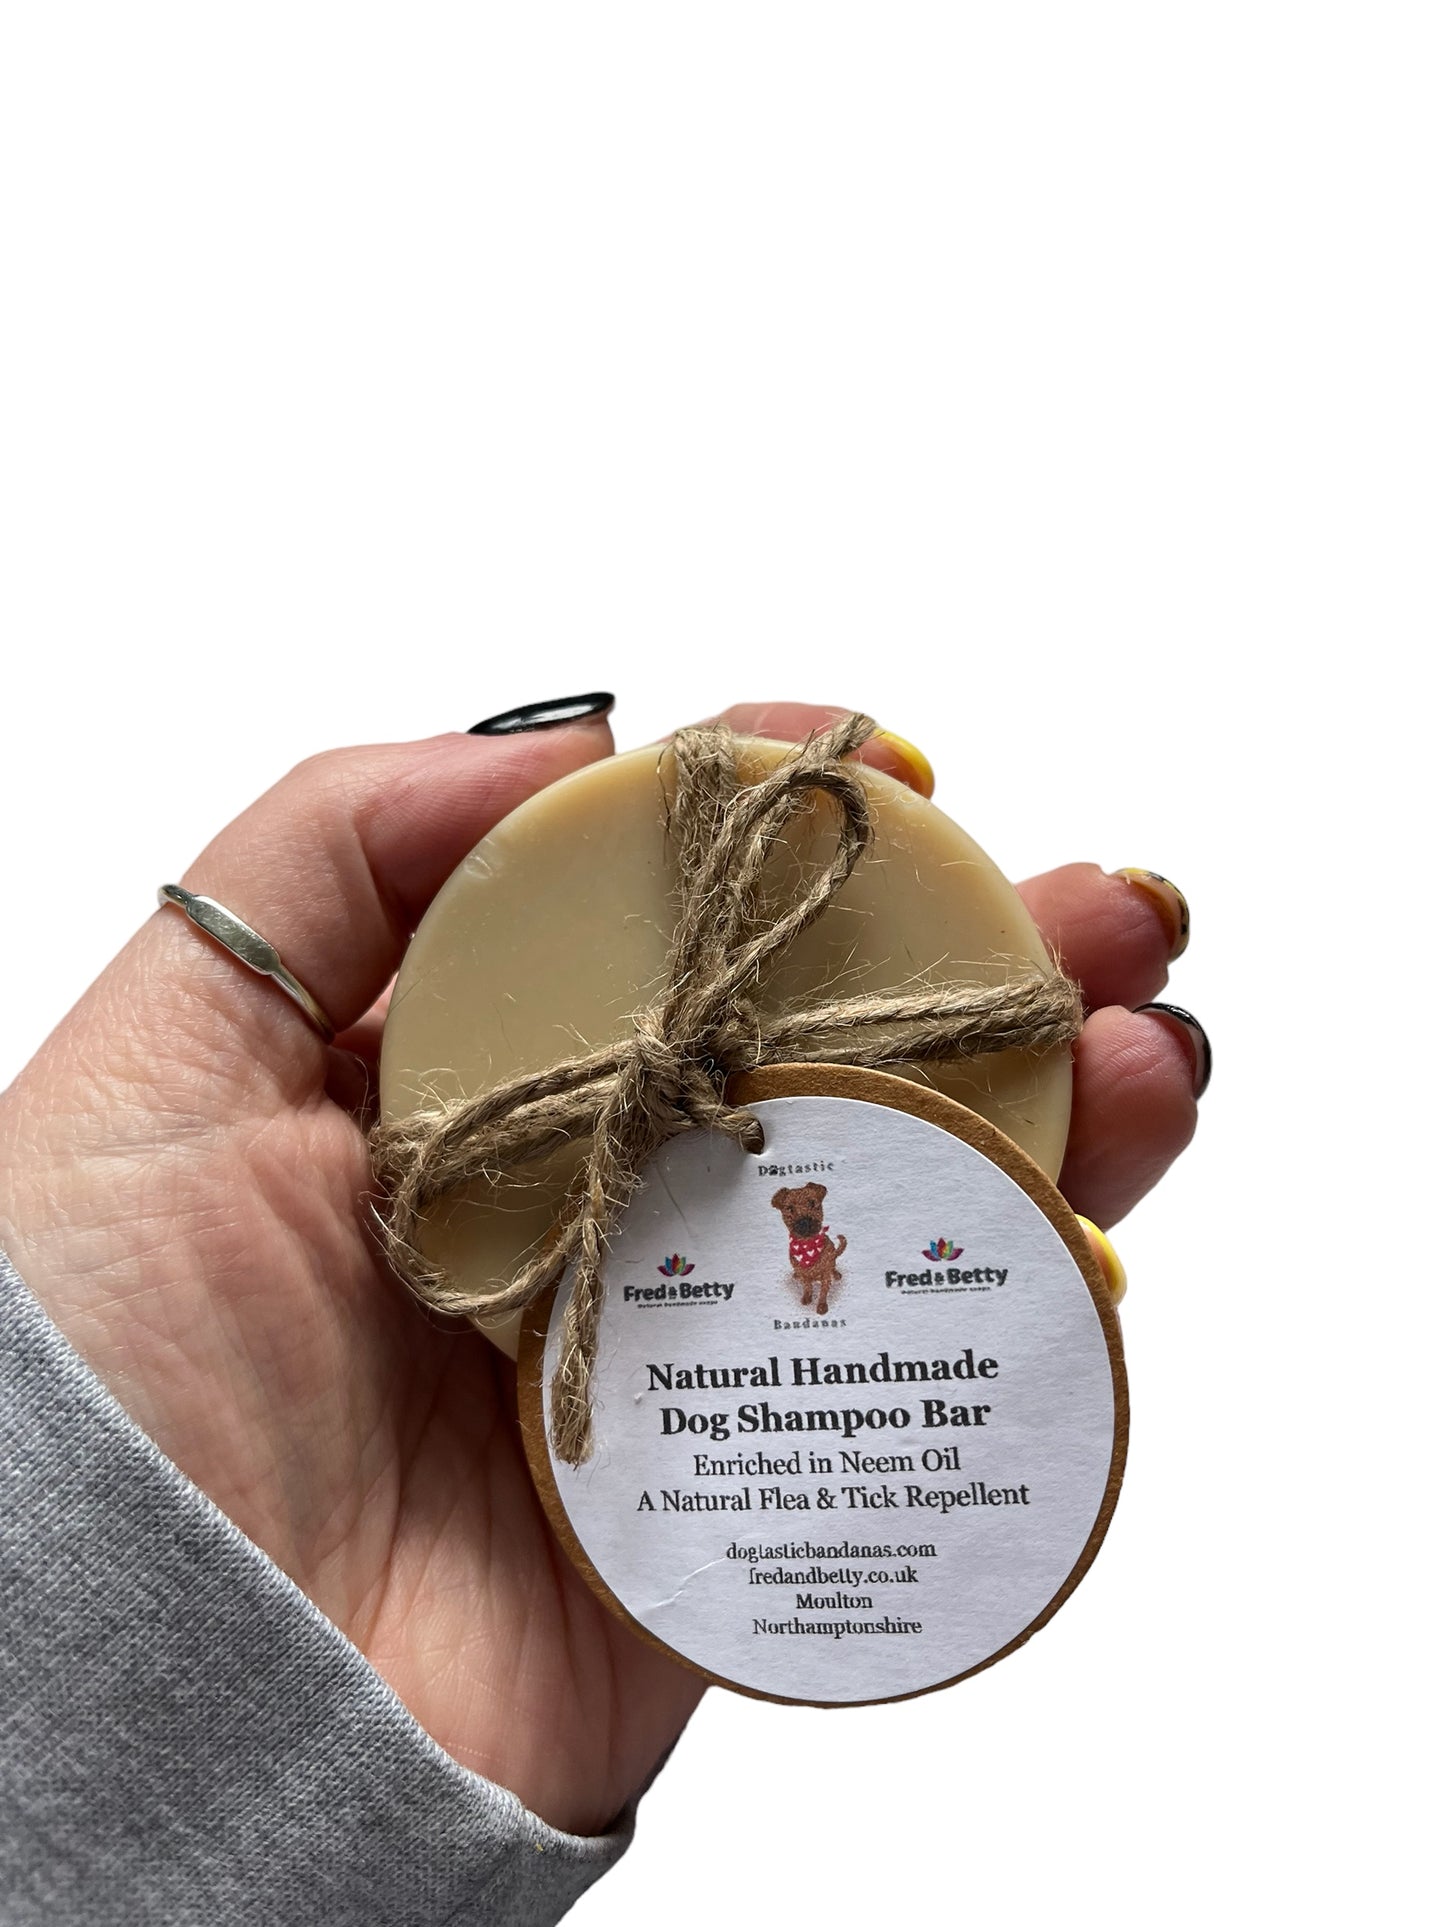 Handmade natural dog shampoo bar